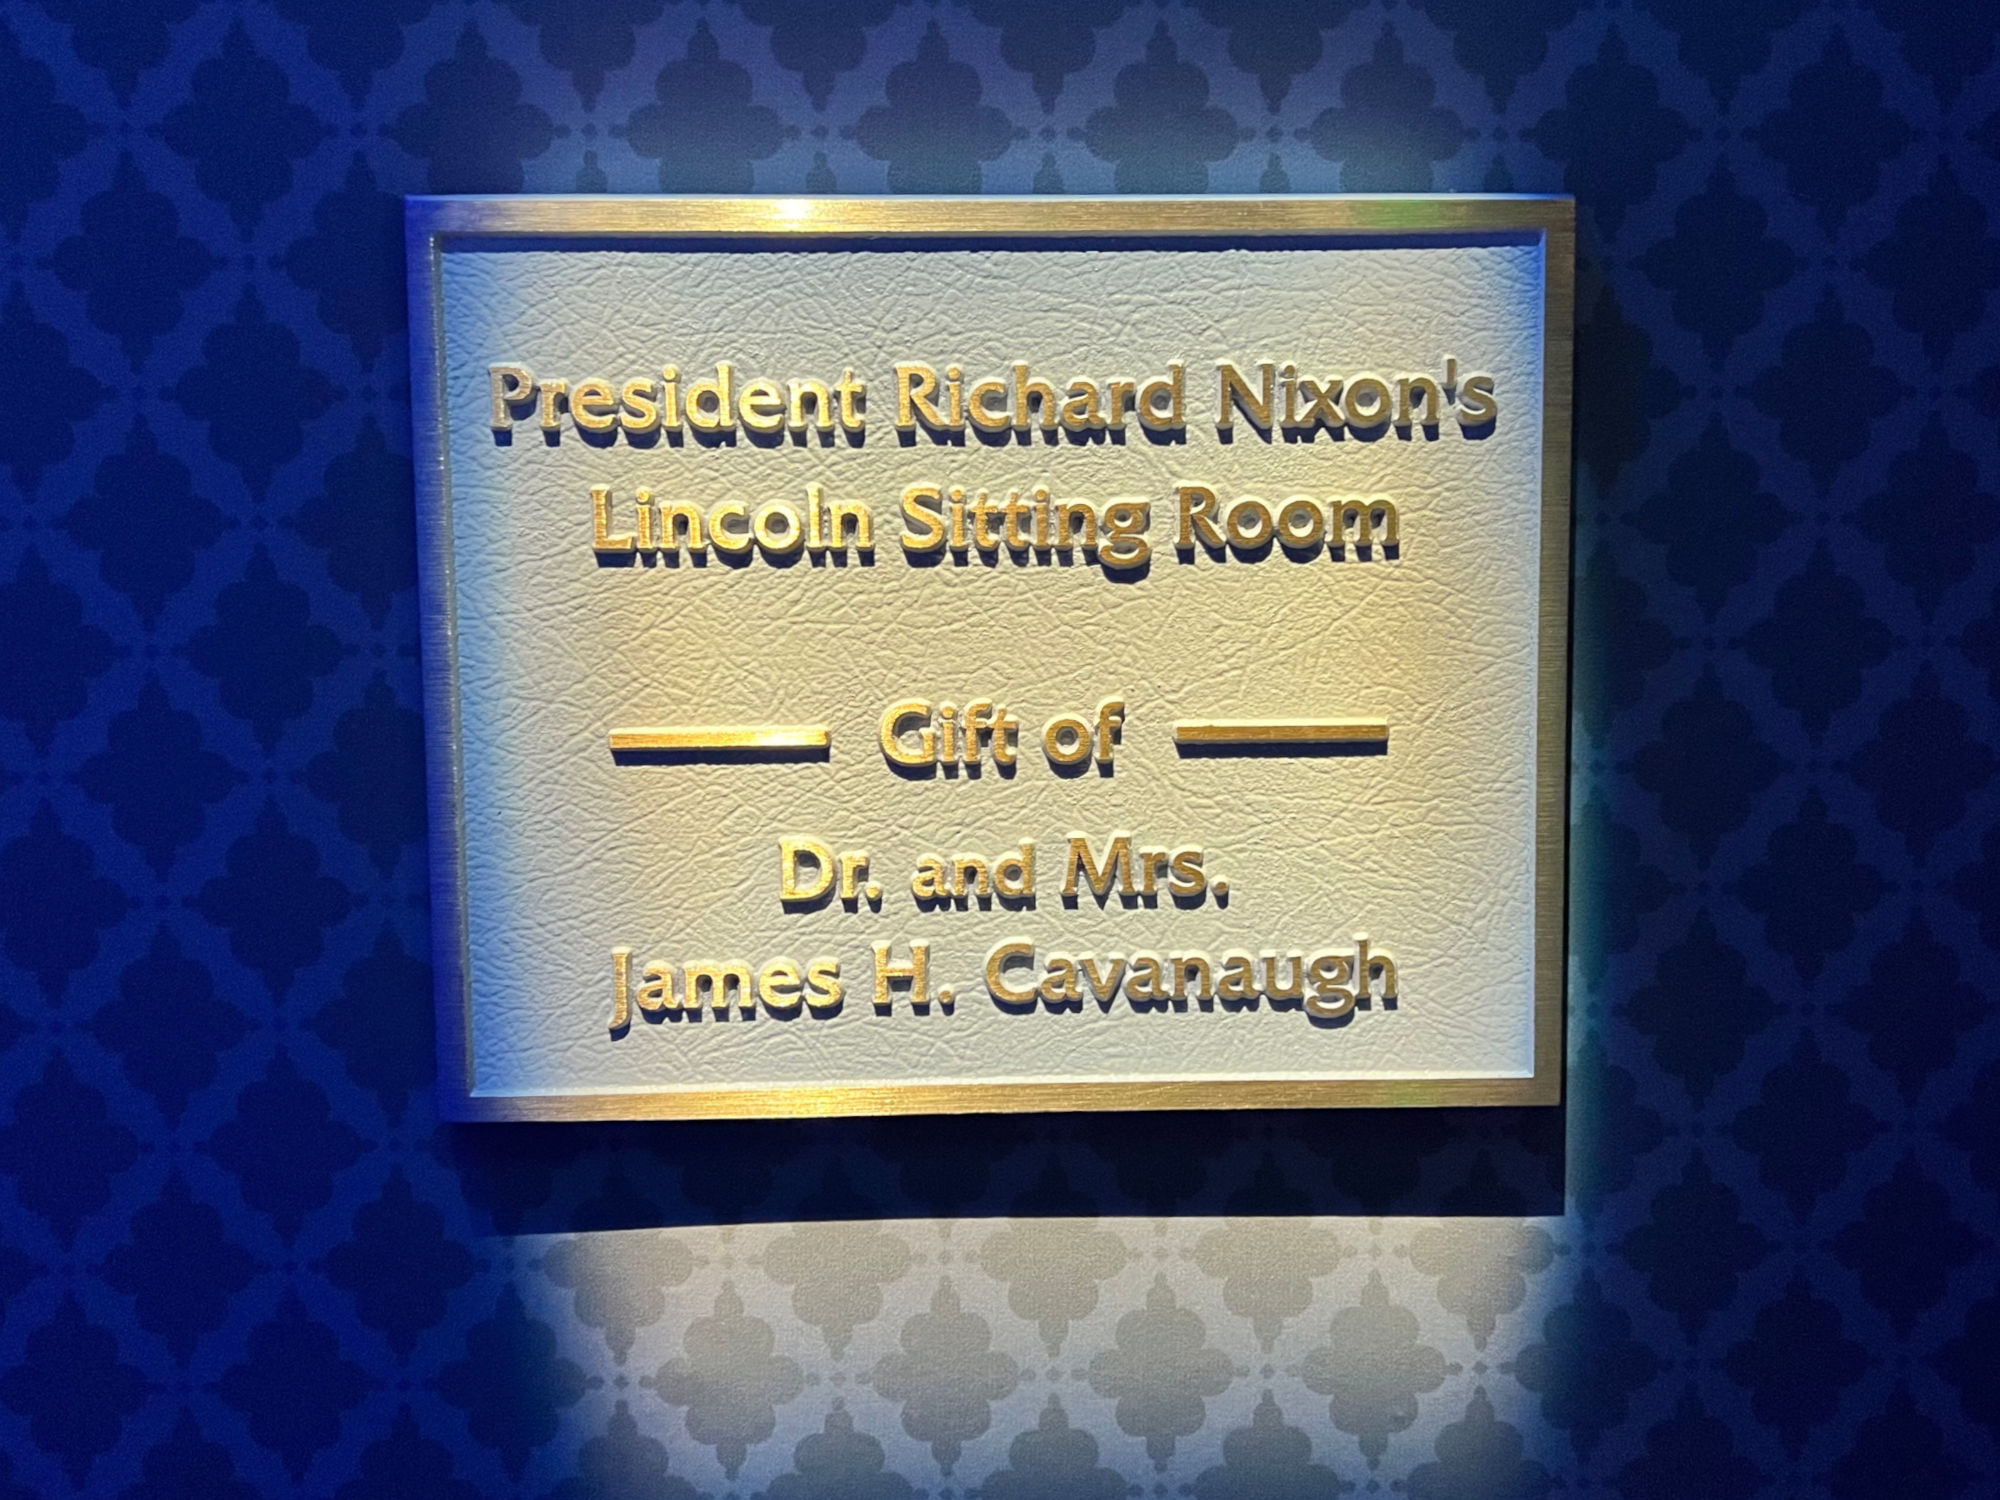 Lincoln Sitting Room Gift Cavanaugh